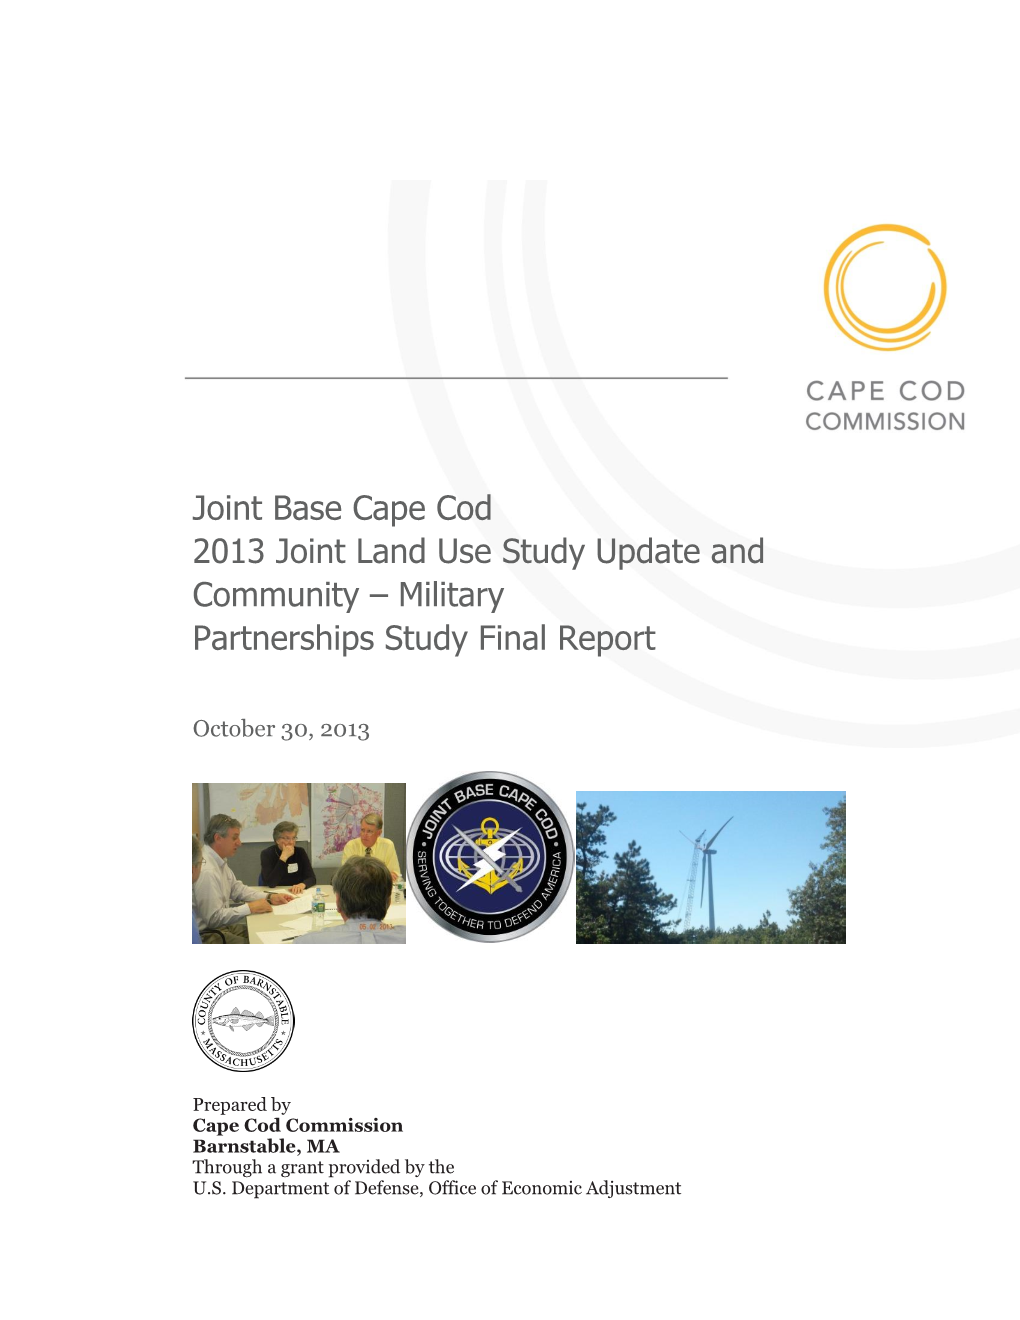 JBCC Joint Land Use Study